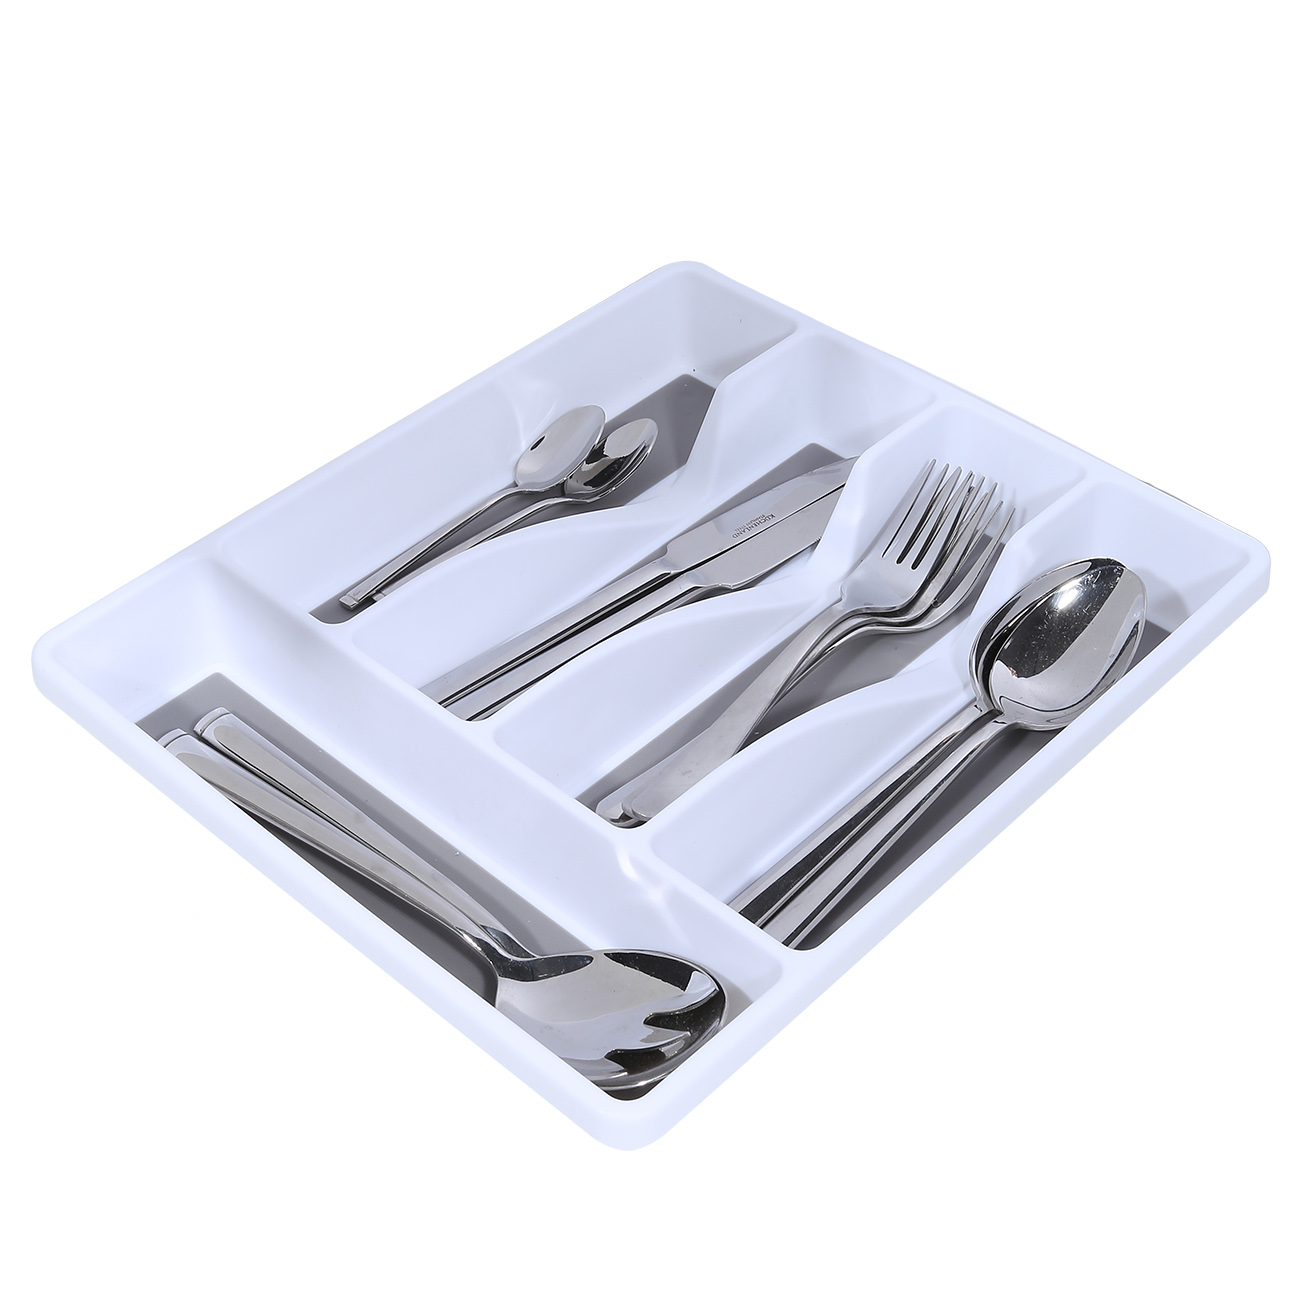 Cutlery tray, 33x29 cm, 5 otd, plastic / rubber, white-grey, Non-slip изображение № 3